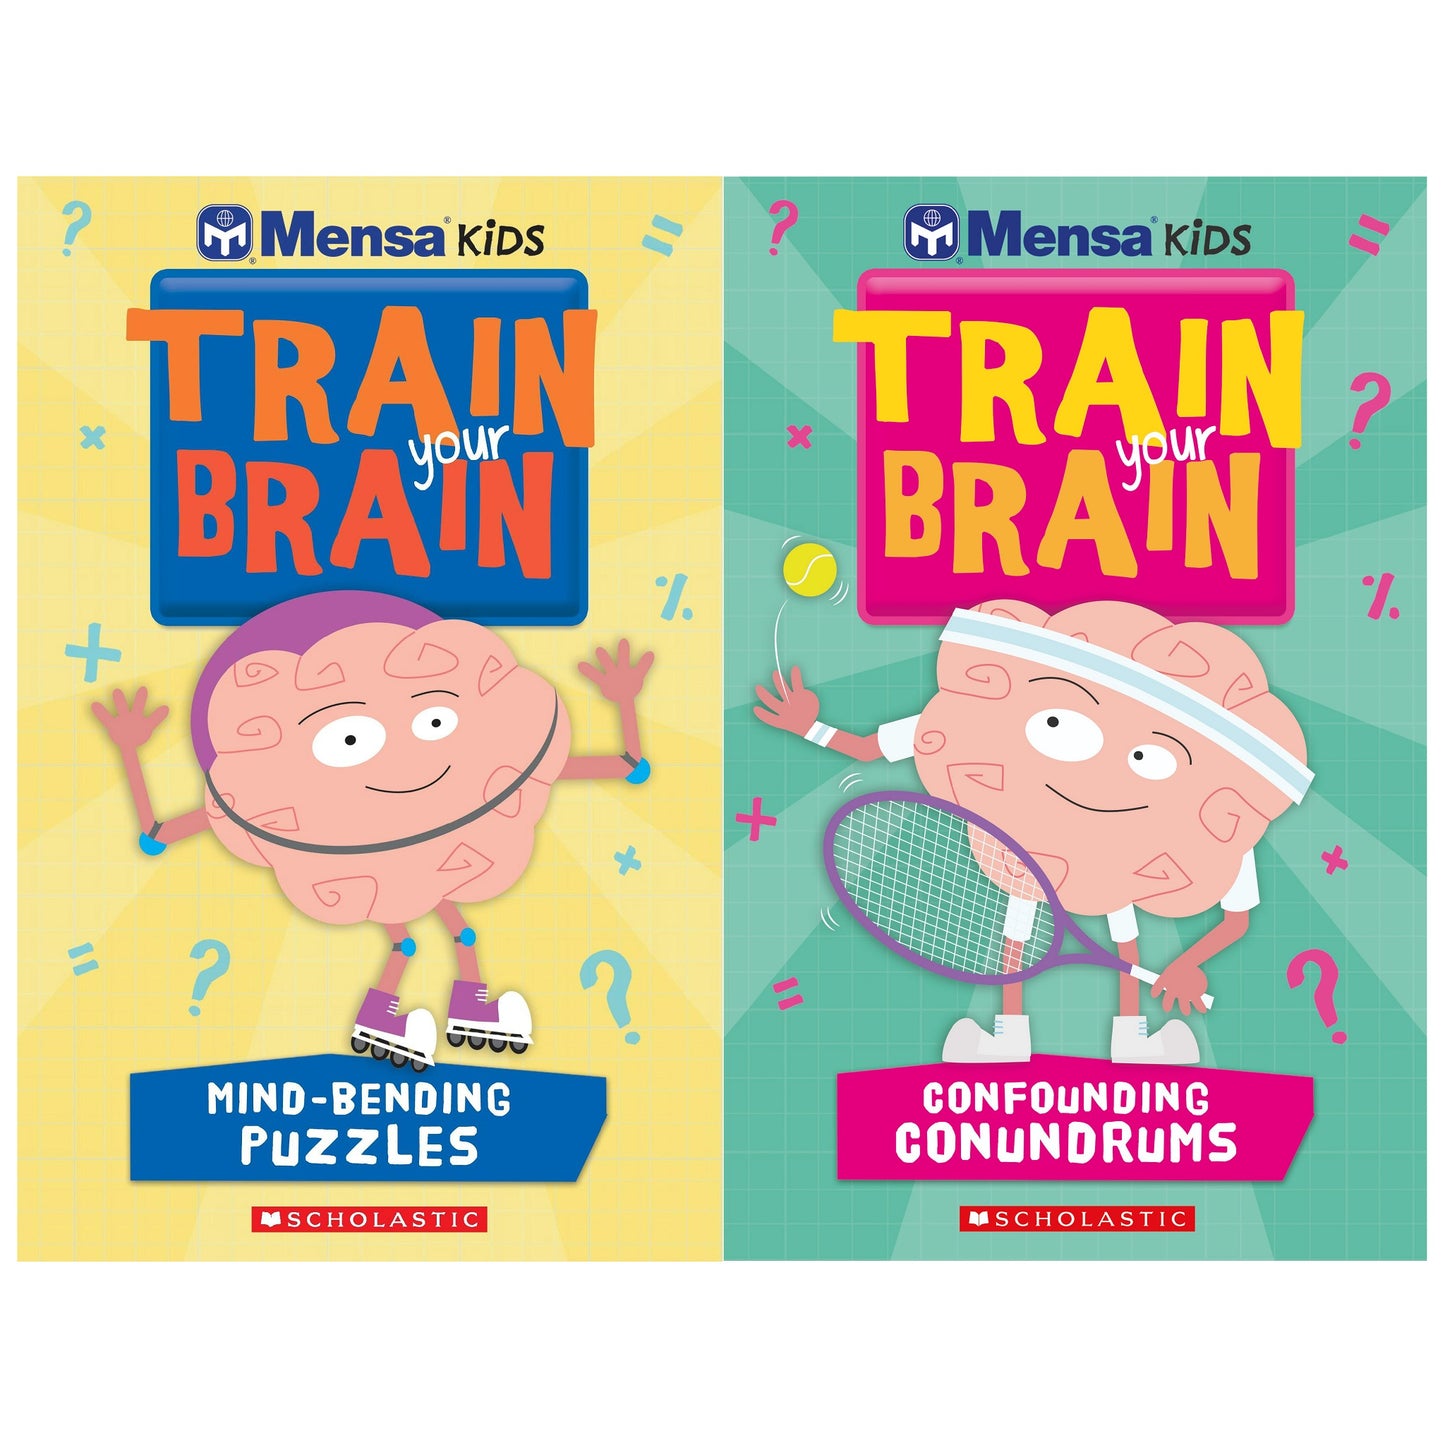 Scholastic Mensa Train Your Brain Puzzle Books 門薩鍛鍊大腦解謎系列